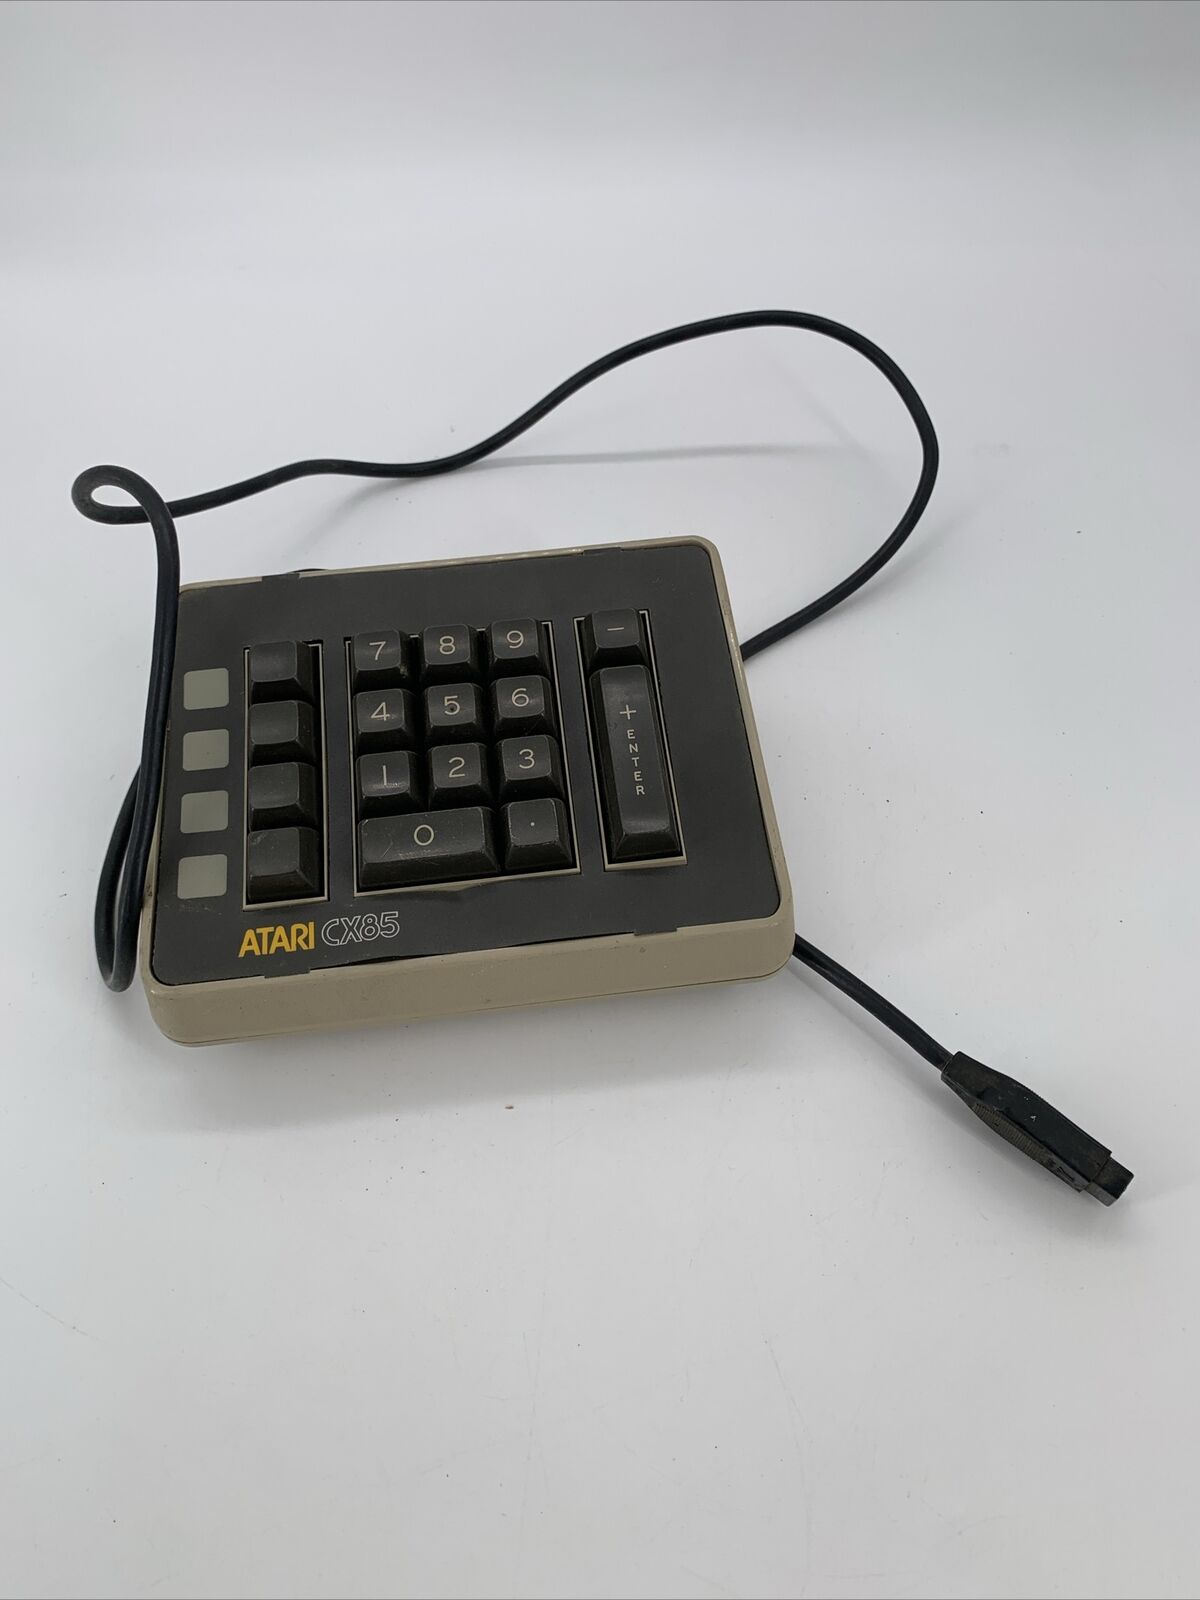 Atari CX85 Numeric Keypad for Atari 400/800 XL/XE (Untested)